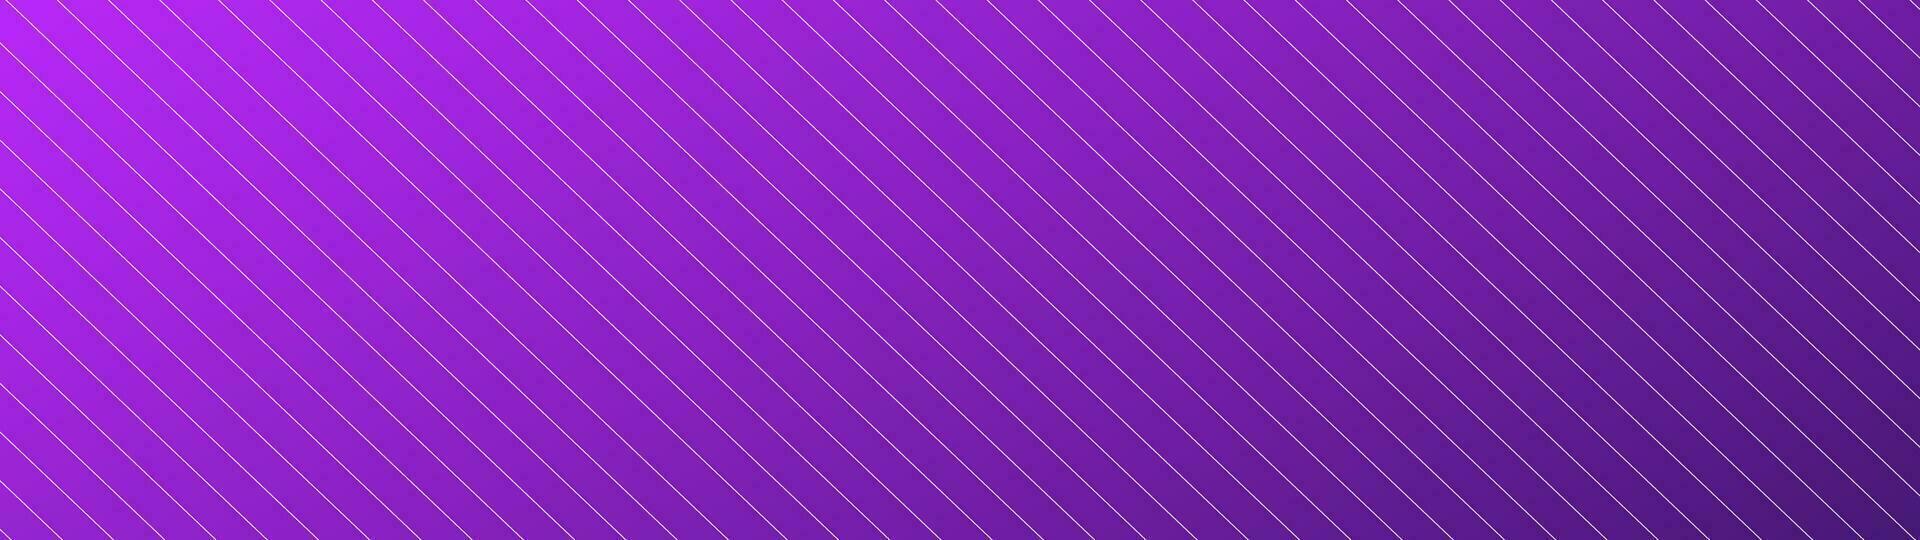 Abstract purple background vector graphic illustration. Futuristic gradient liquid curve wave with random line. Dark pink textured waving flow shape backdrop